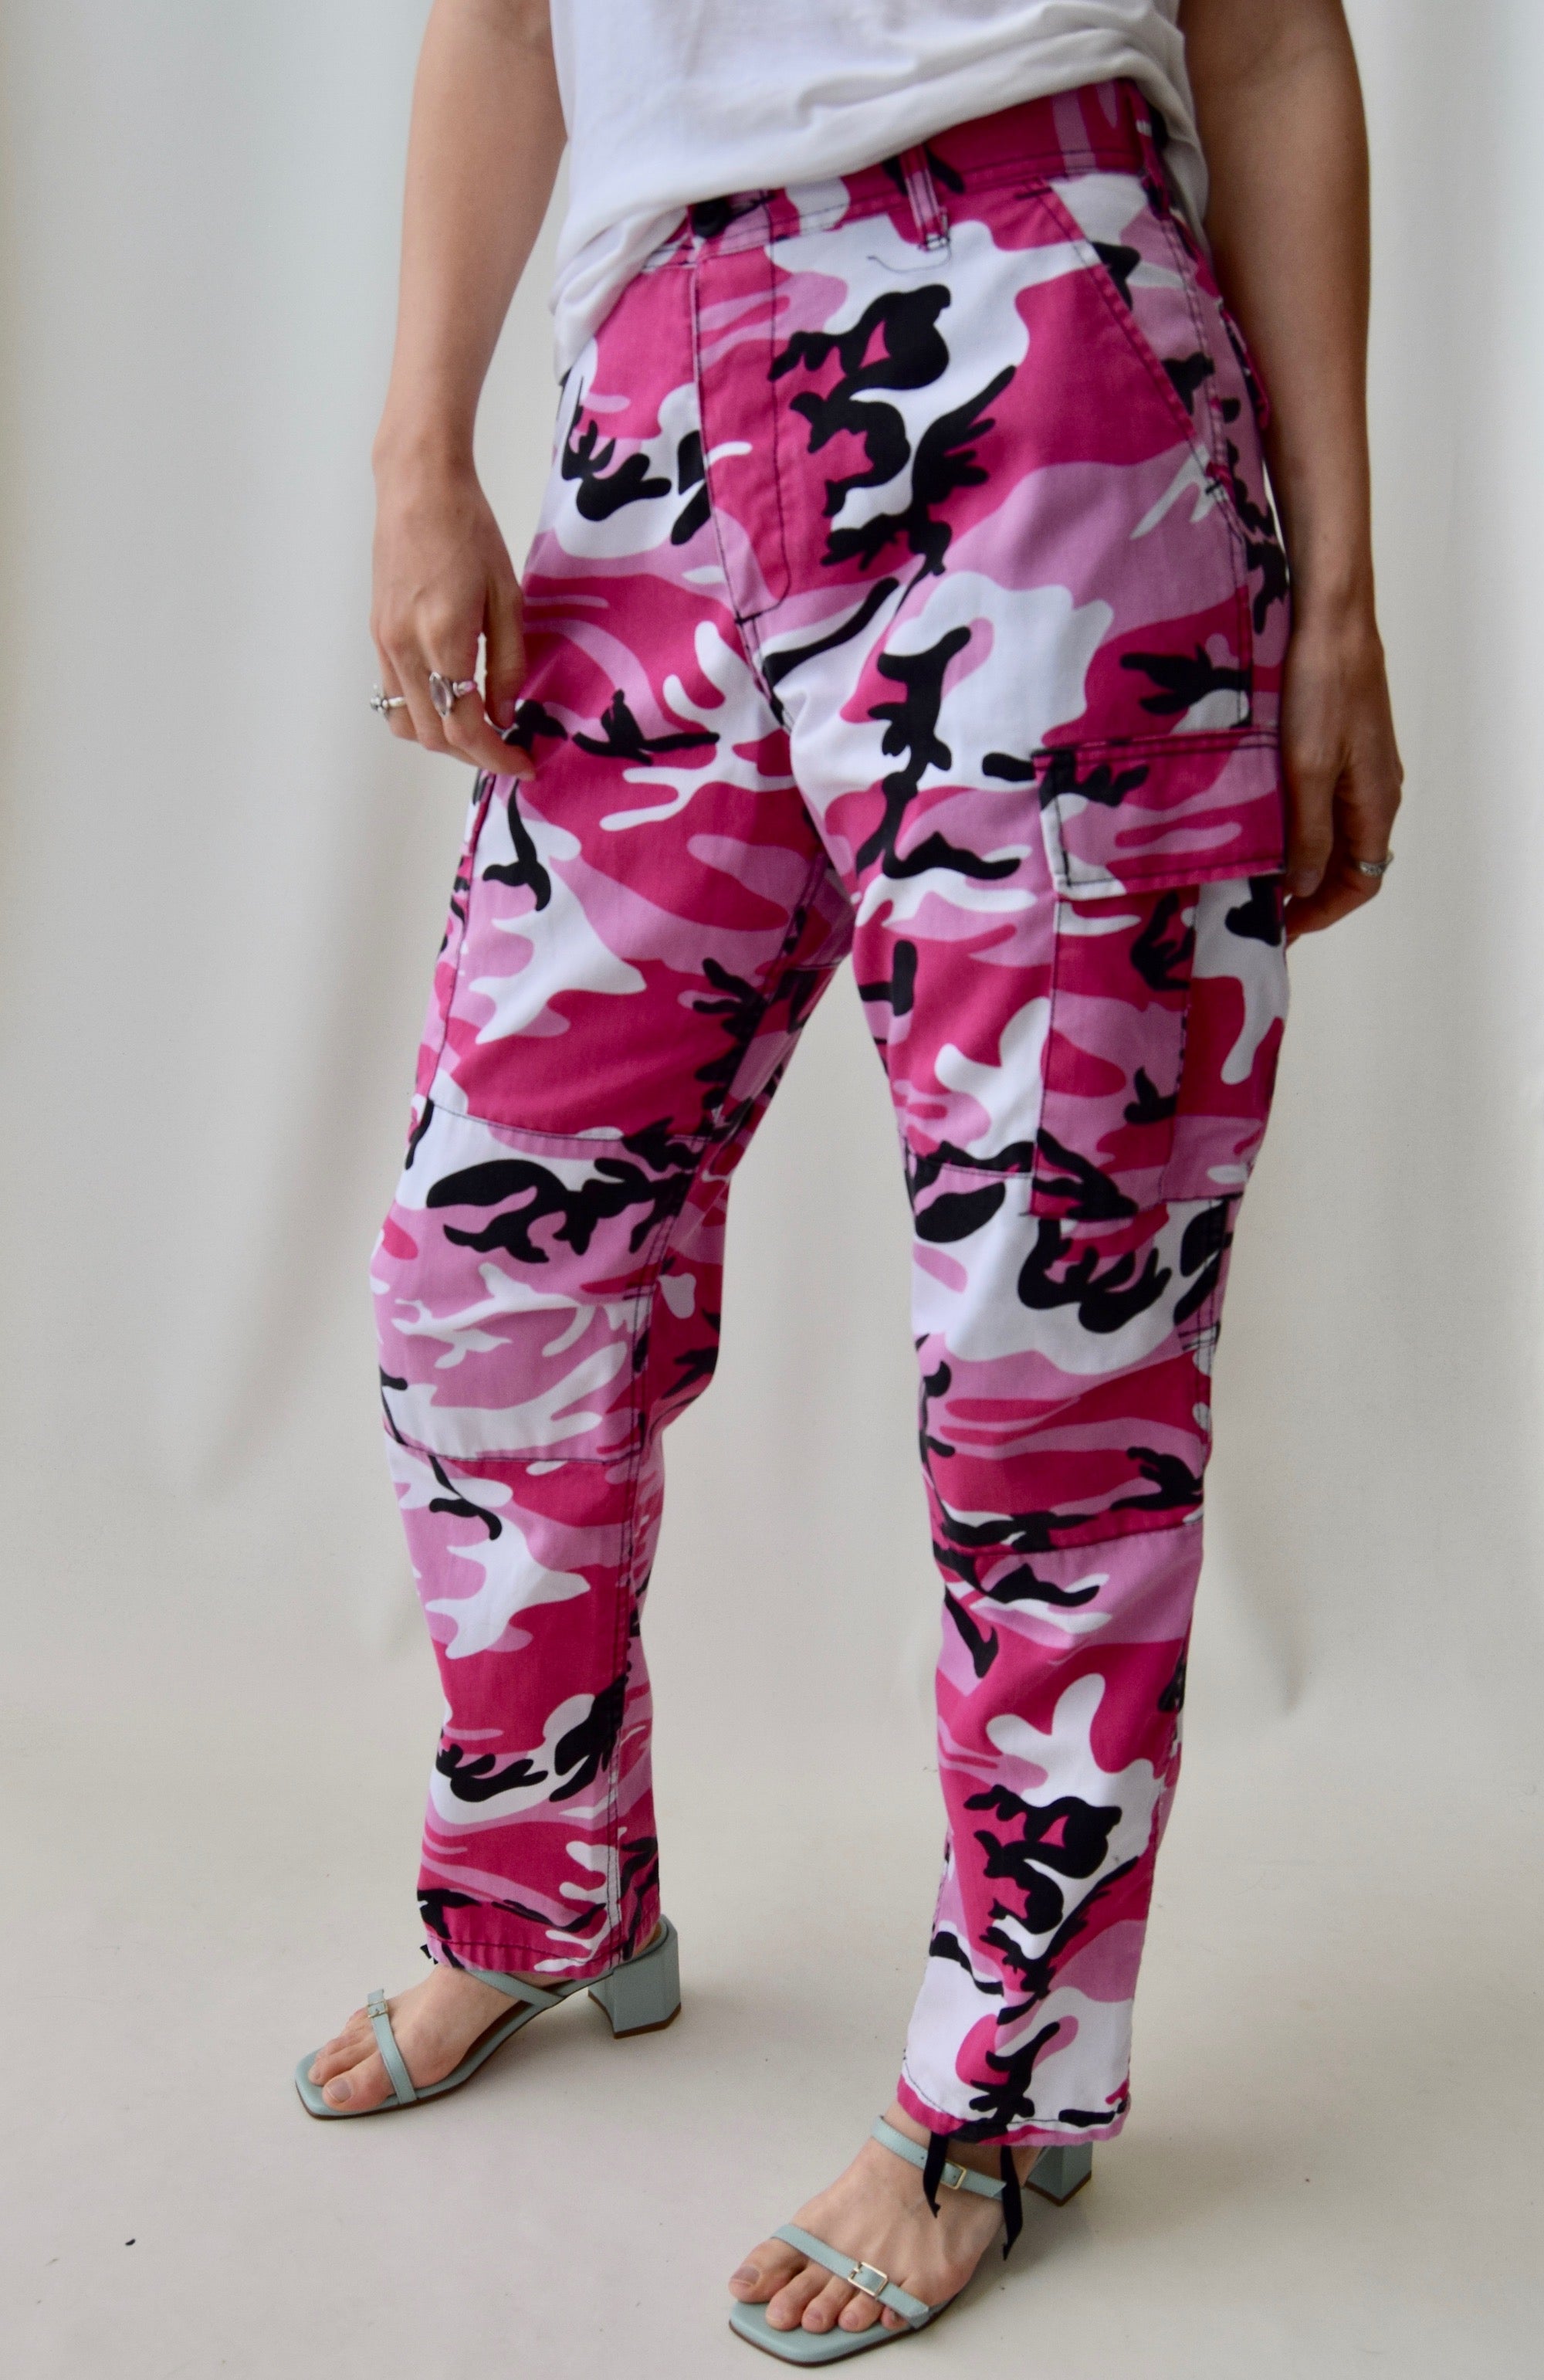 Pink Camo Army Pants